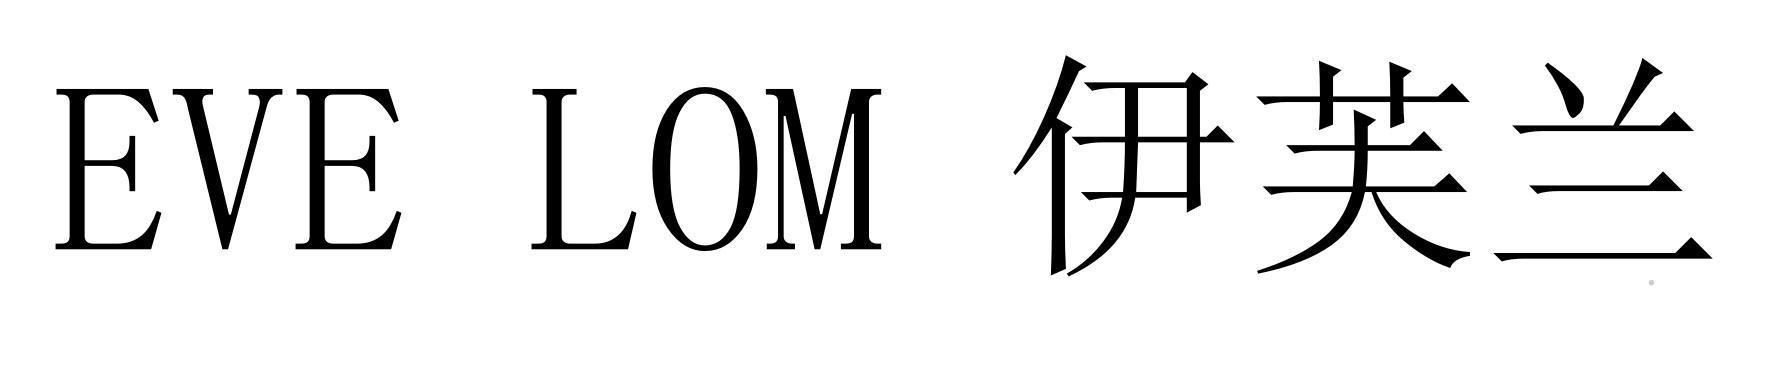 EVE LOM 伊芙兰logo